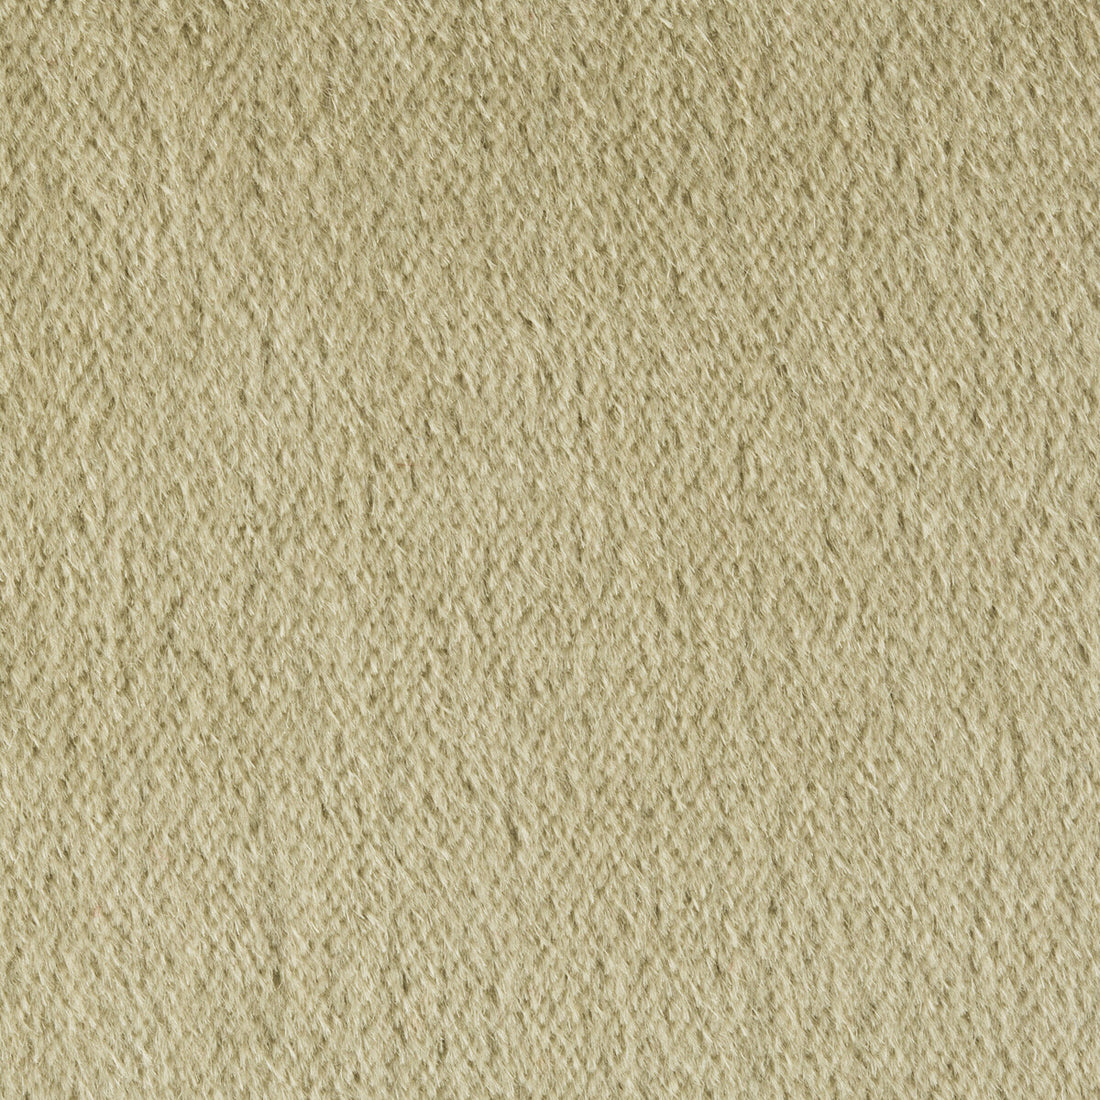 Autun Mohair Velvet fabric in eucalyptus color - pattern BR-89778.311.0 - by Brunschwig &amp; Fils